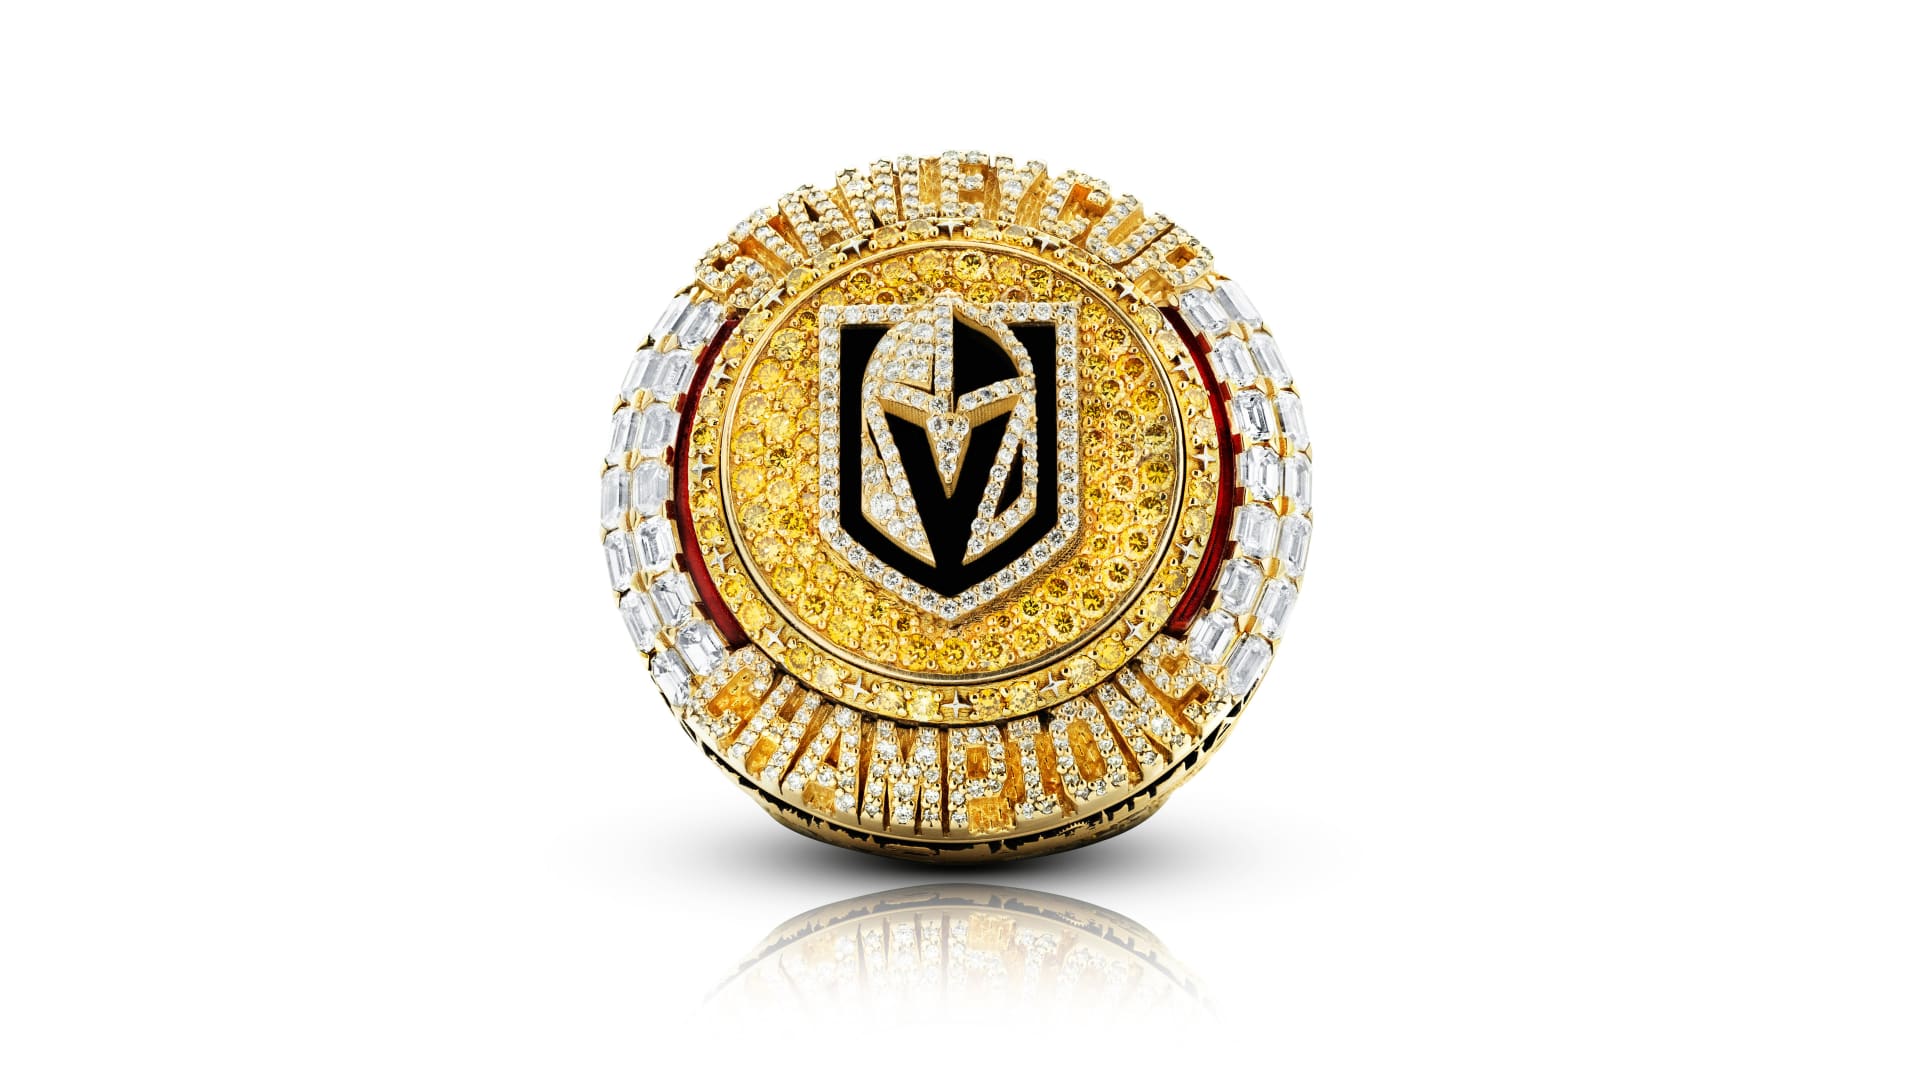 Golden Knights Receive Championship Rings | Vegas Golden Knights